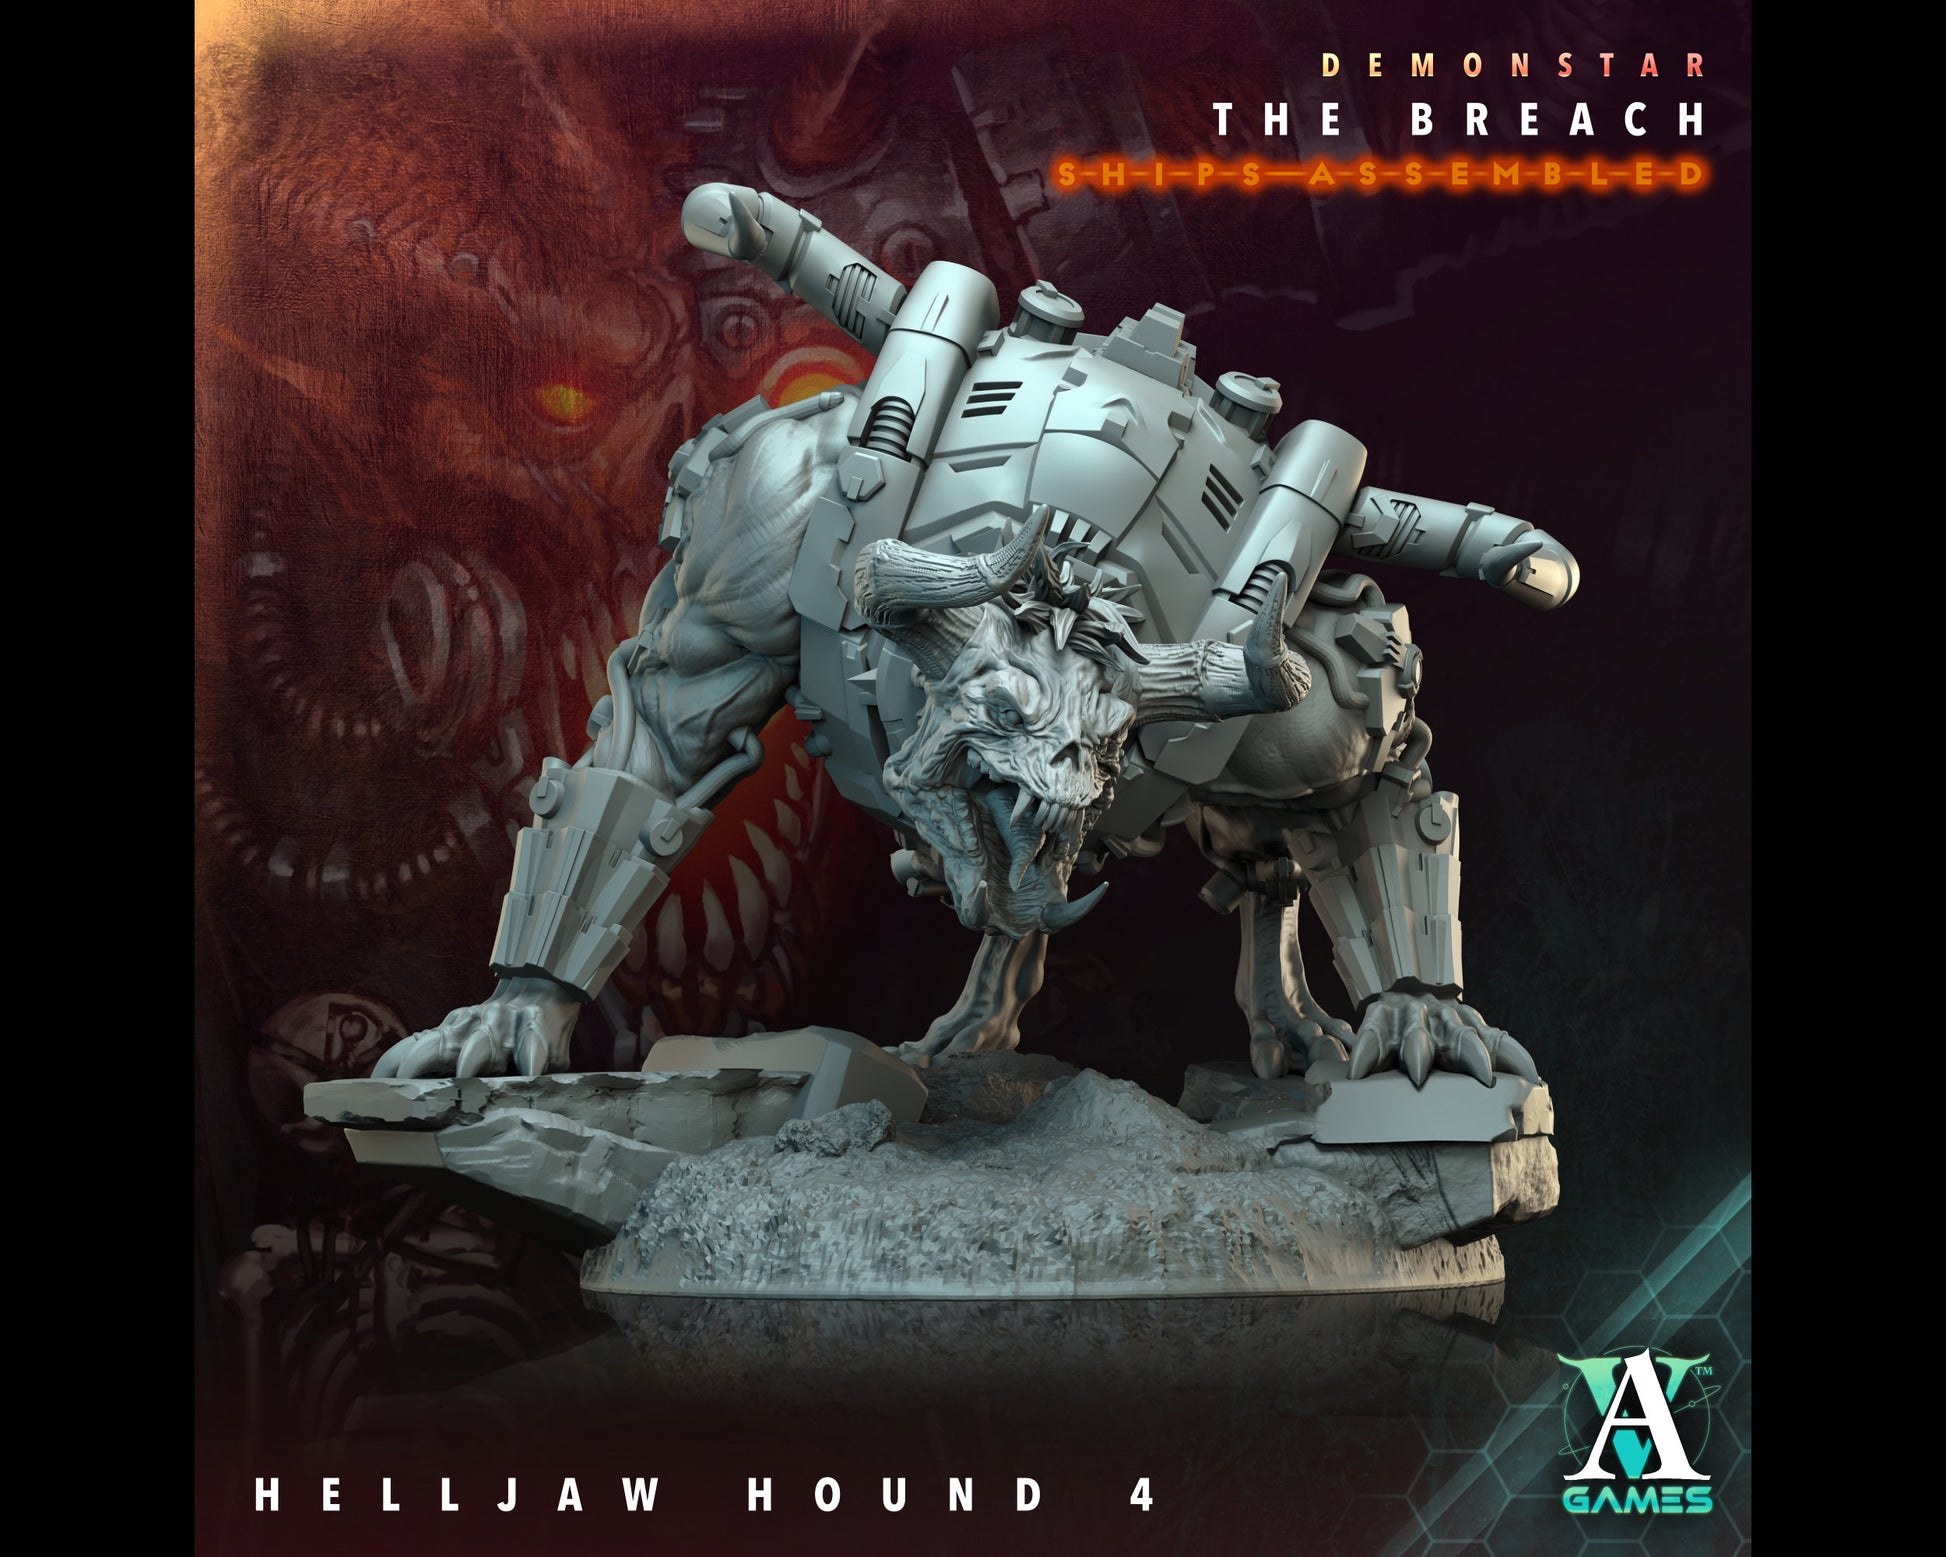 Helljaw Hound 4 - Demonstar: The Breach - Highly Detailed Resin 8k 3D Printed Miniature